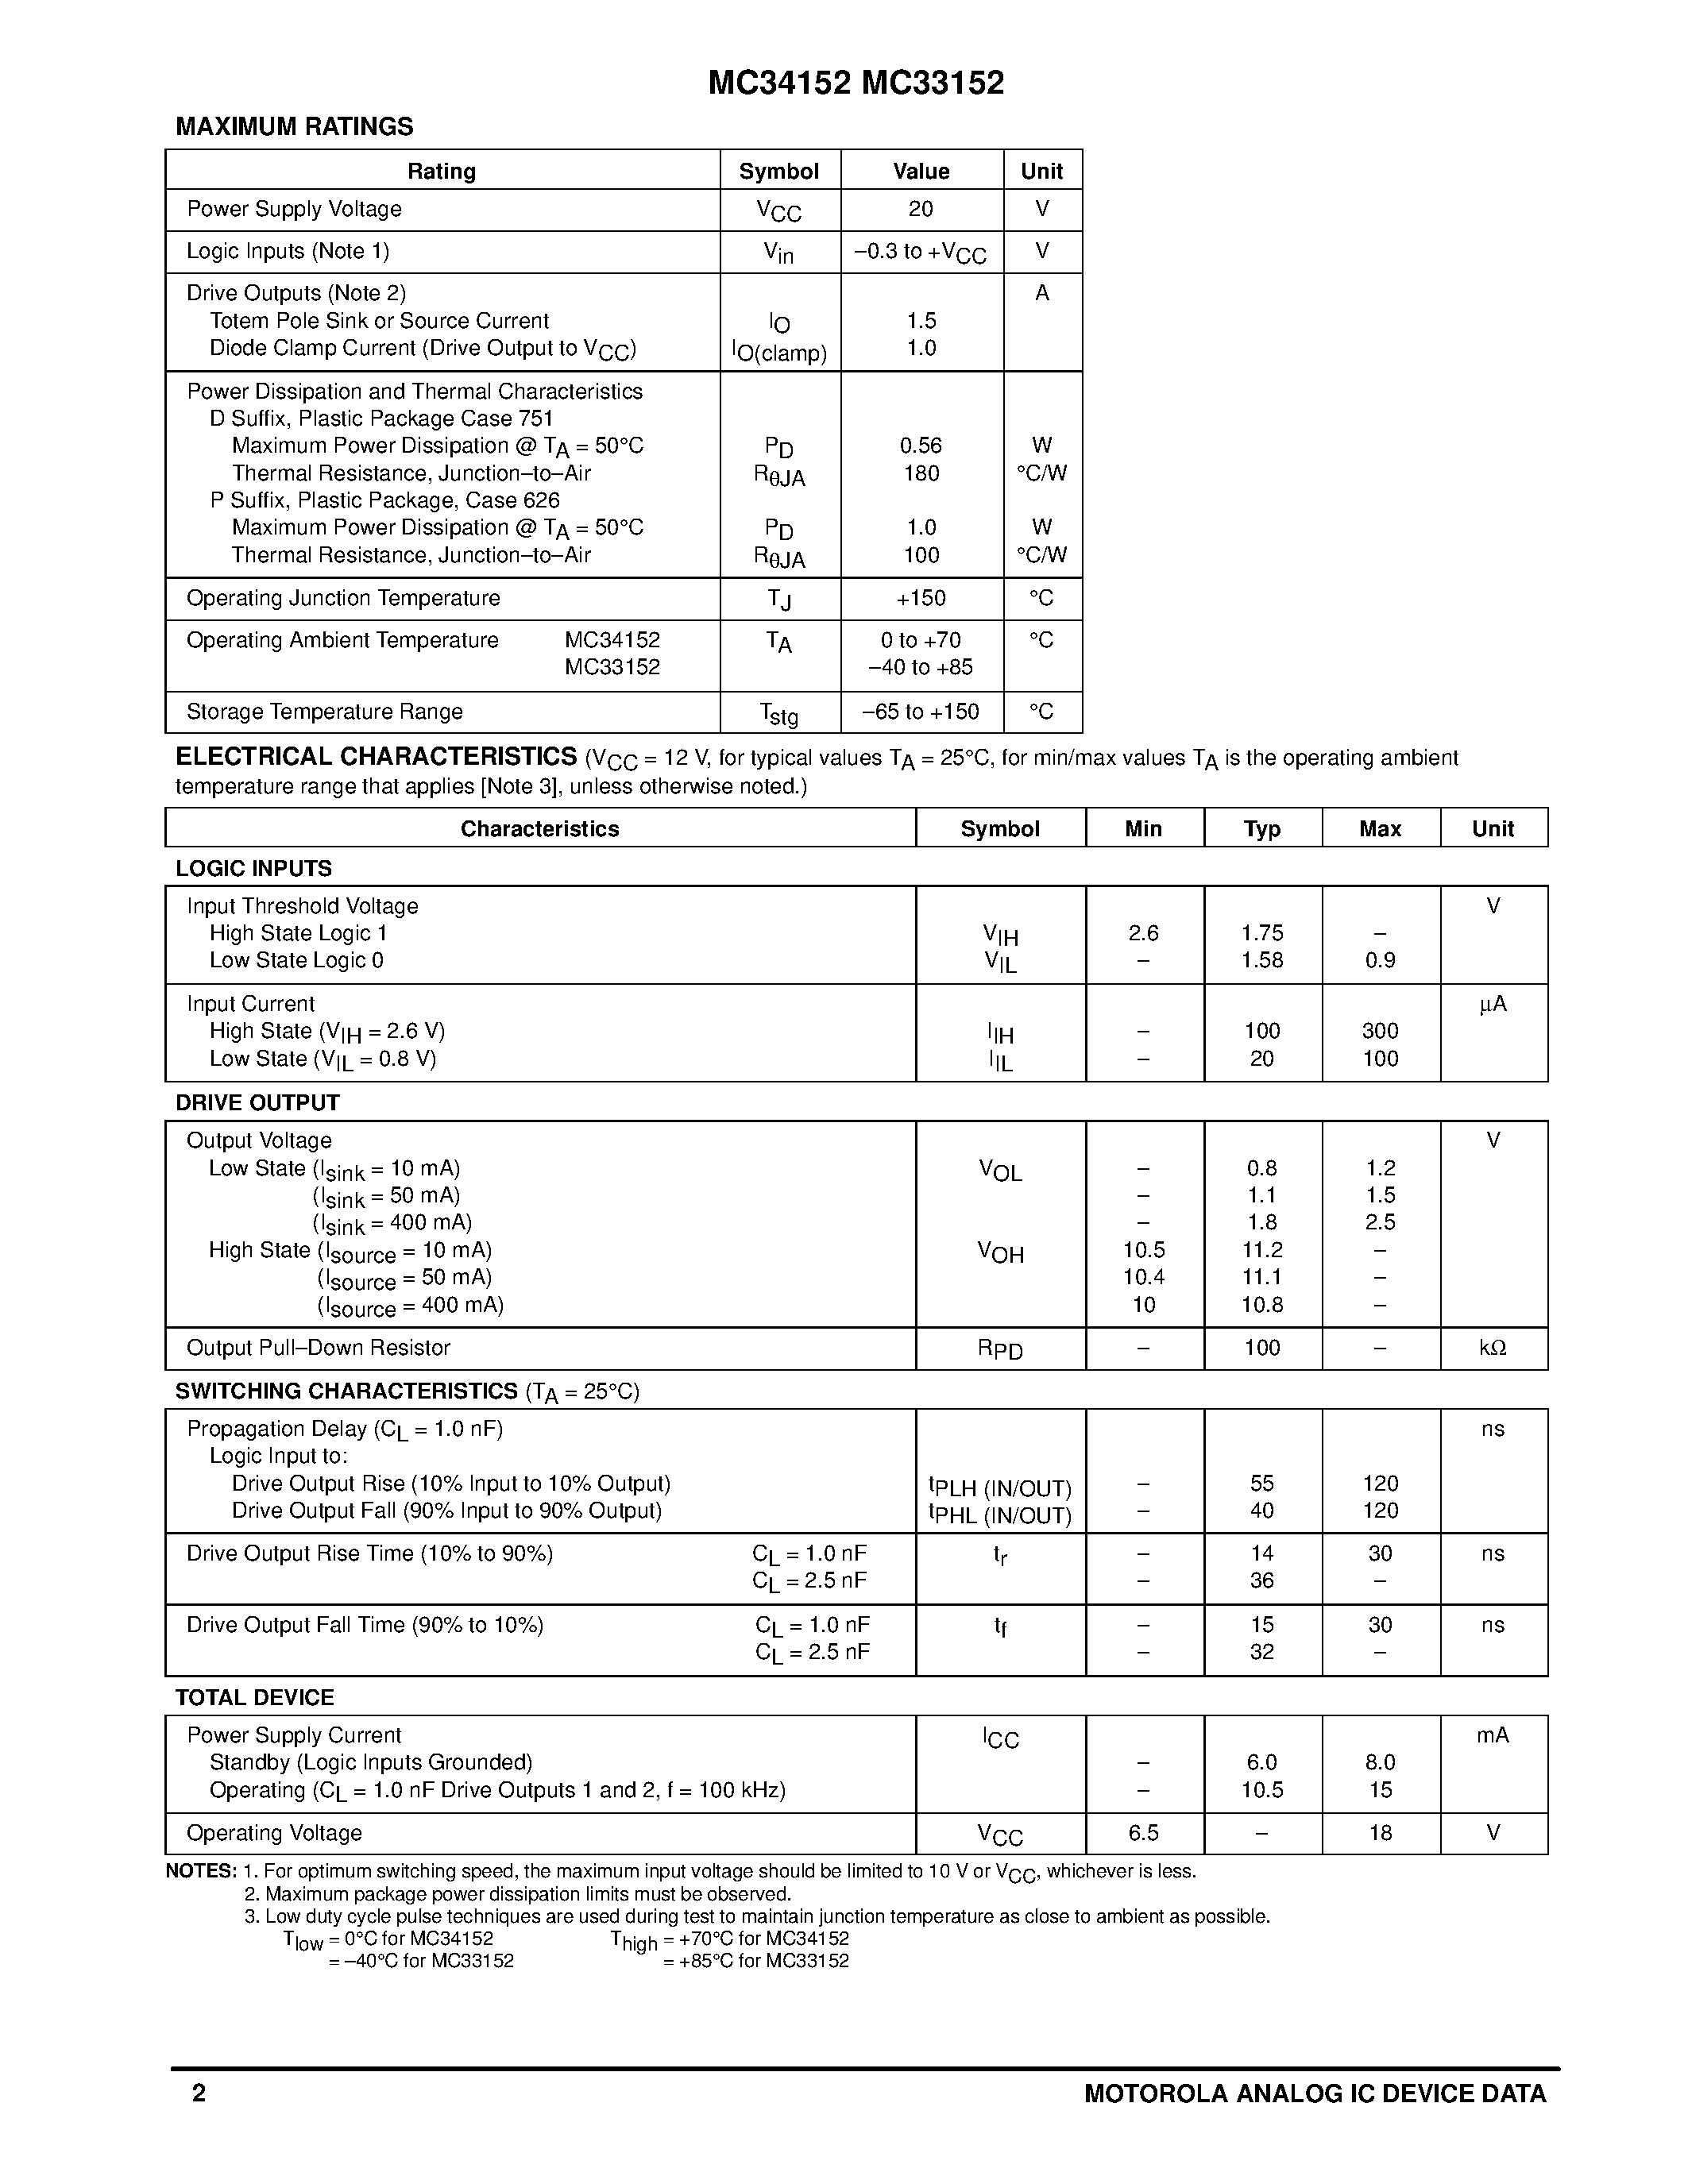 Datasheet MC33152 - (MC34152 / MC33152) HIGH SPEED DUAL MOSFET DRIVERS page 2